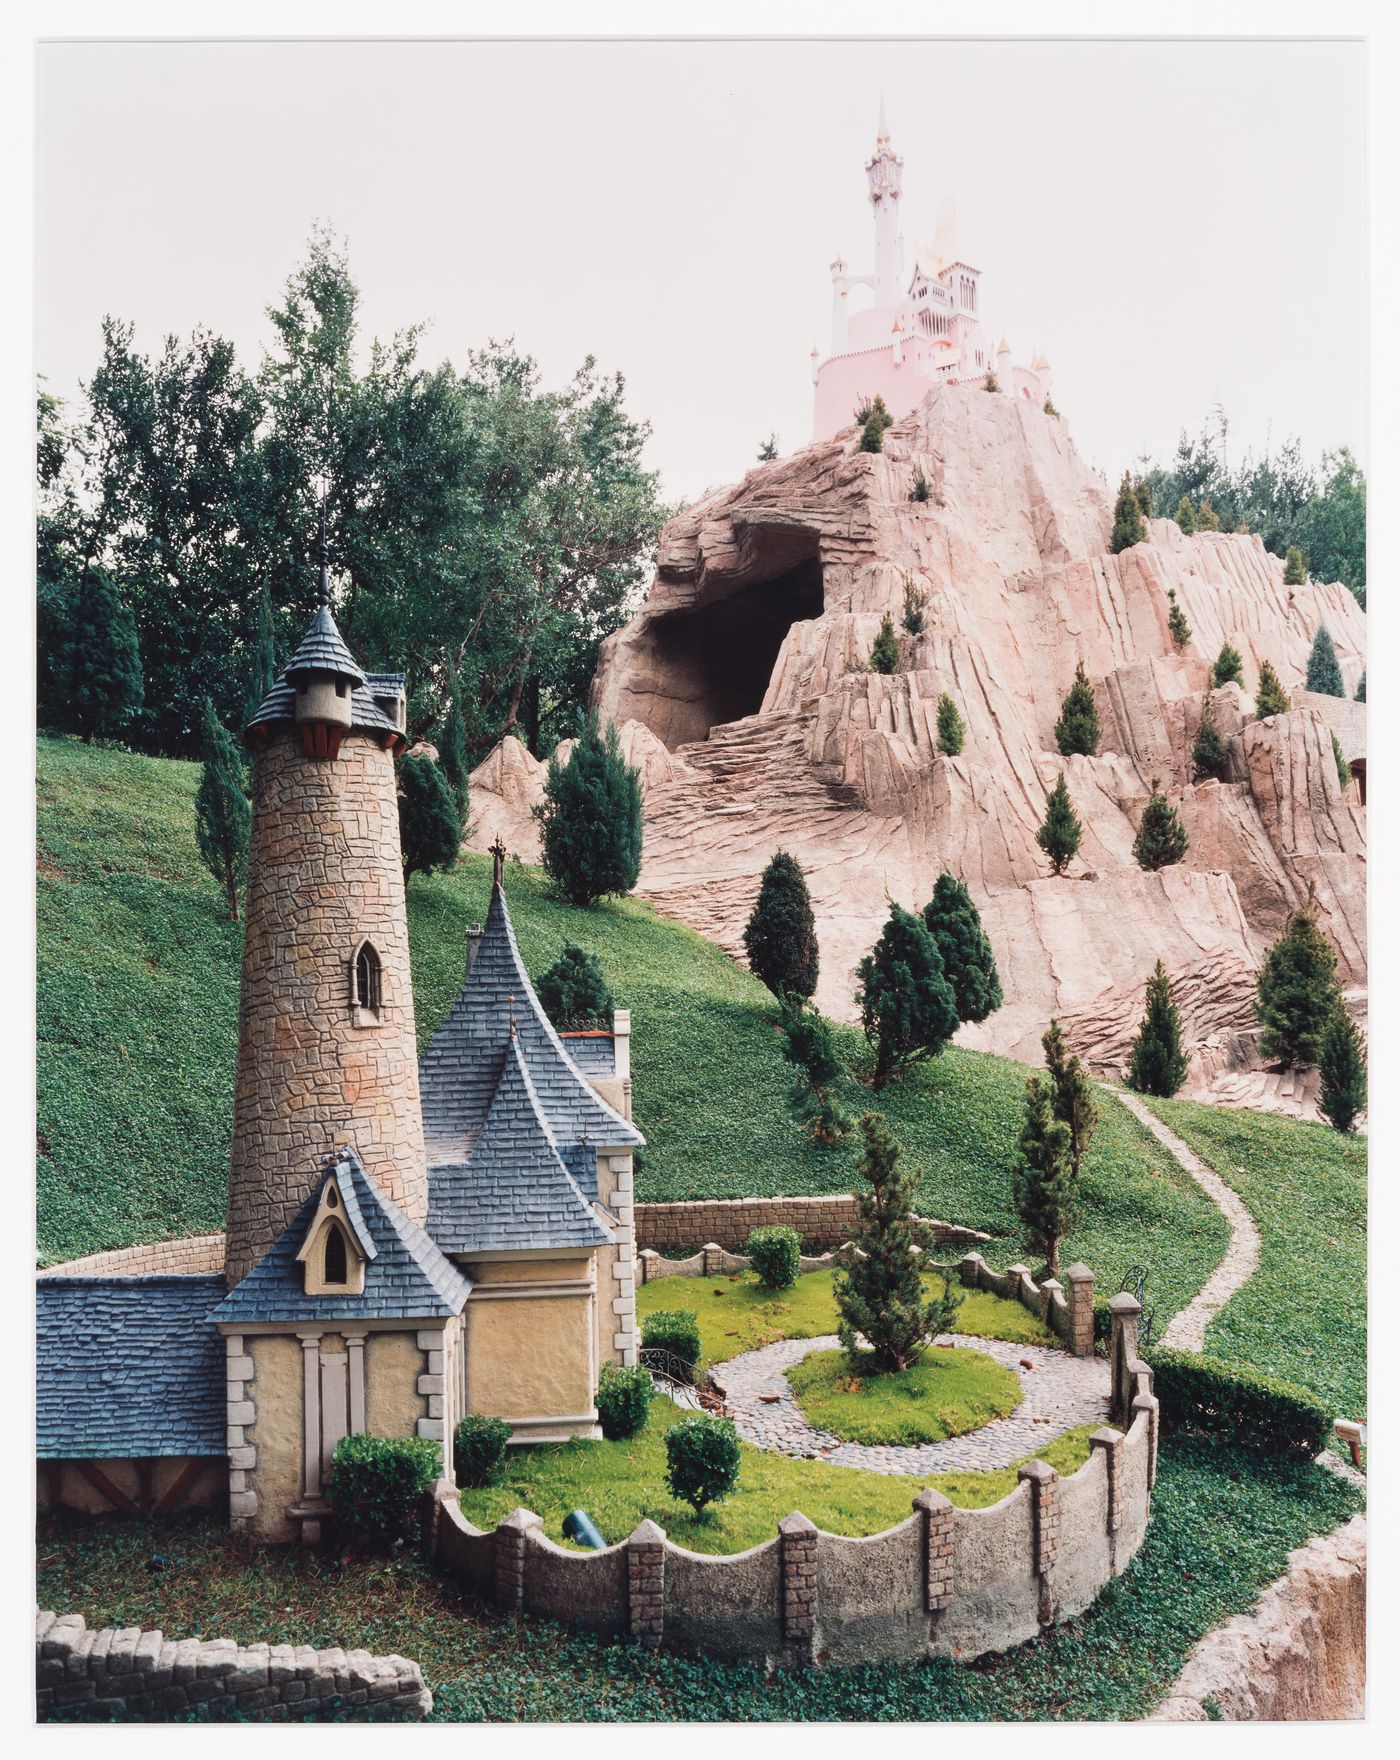 View of two castles in Fantasy Land, Storybook Land, Disneyland, Anaheim, California